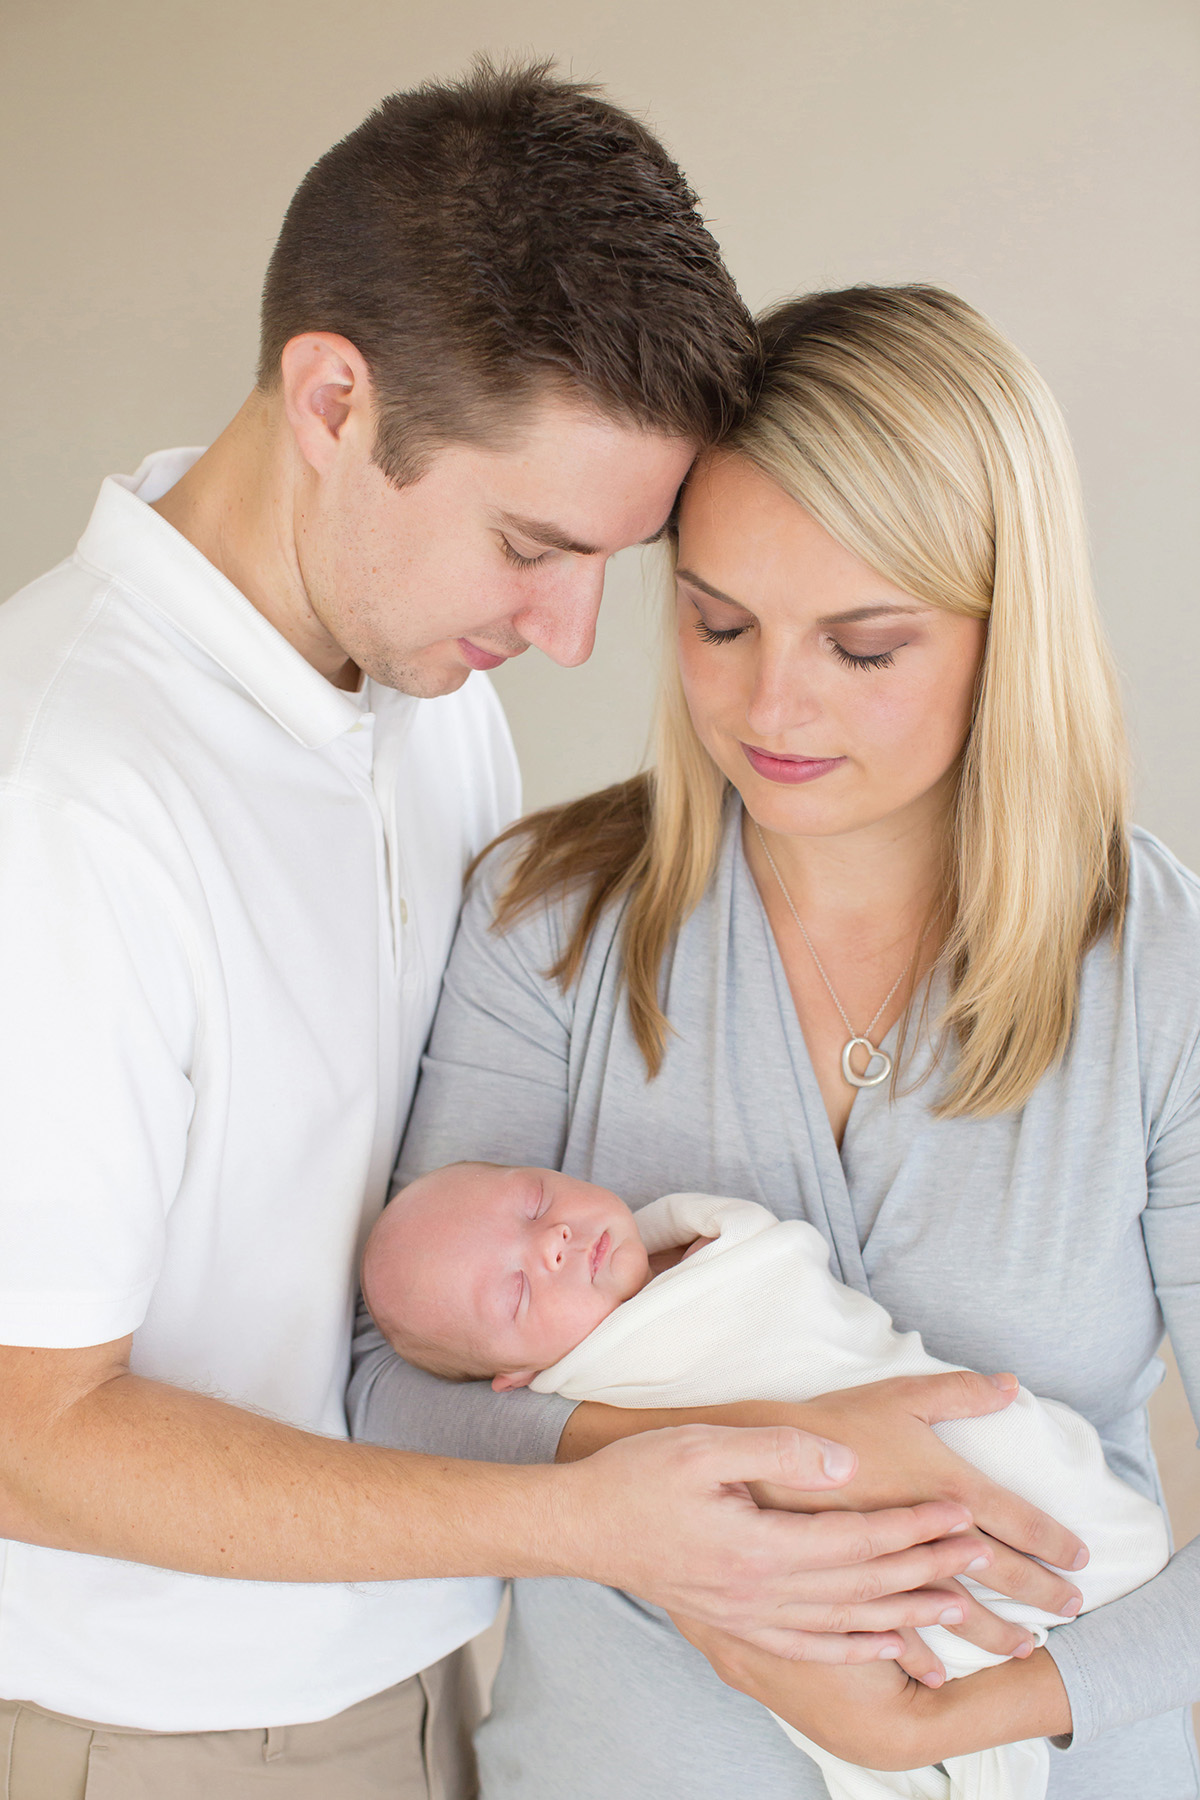 Louisville KY newborn and maternity photographer | Julie Brock Photography | Photography studio in louisville ky | newborn photo session with parents.jpg